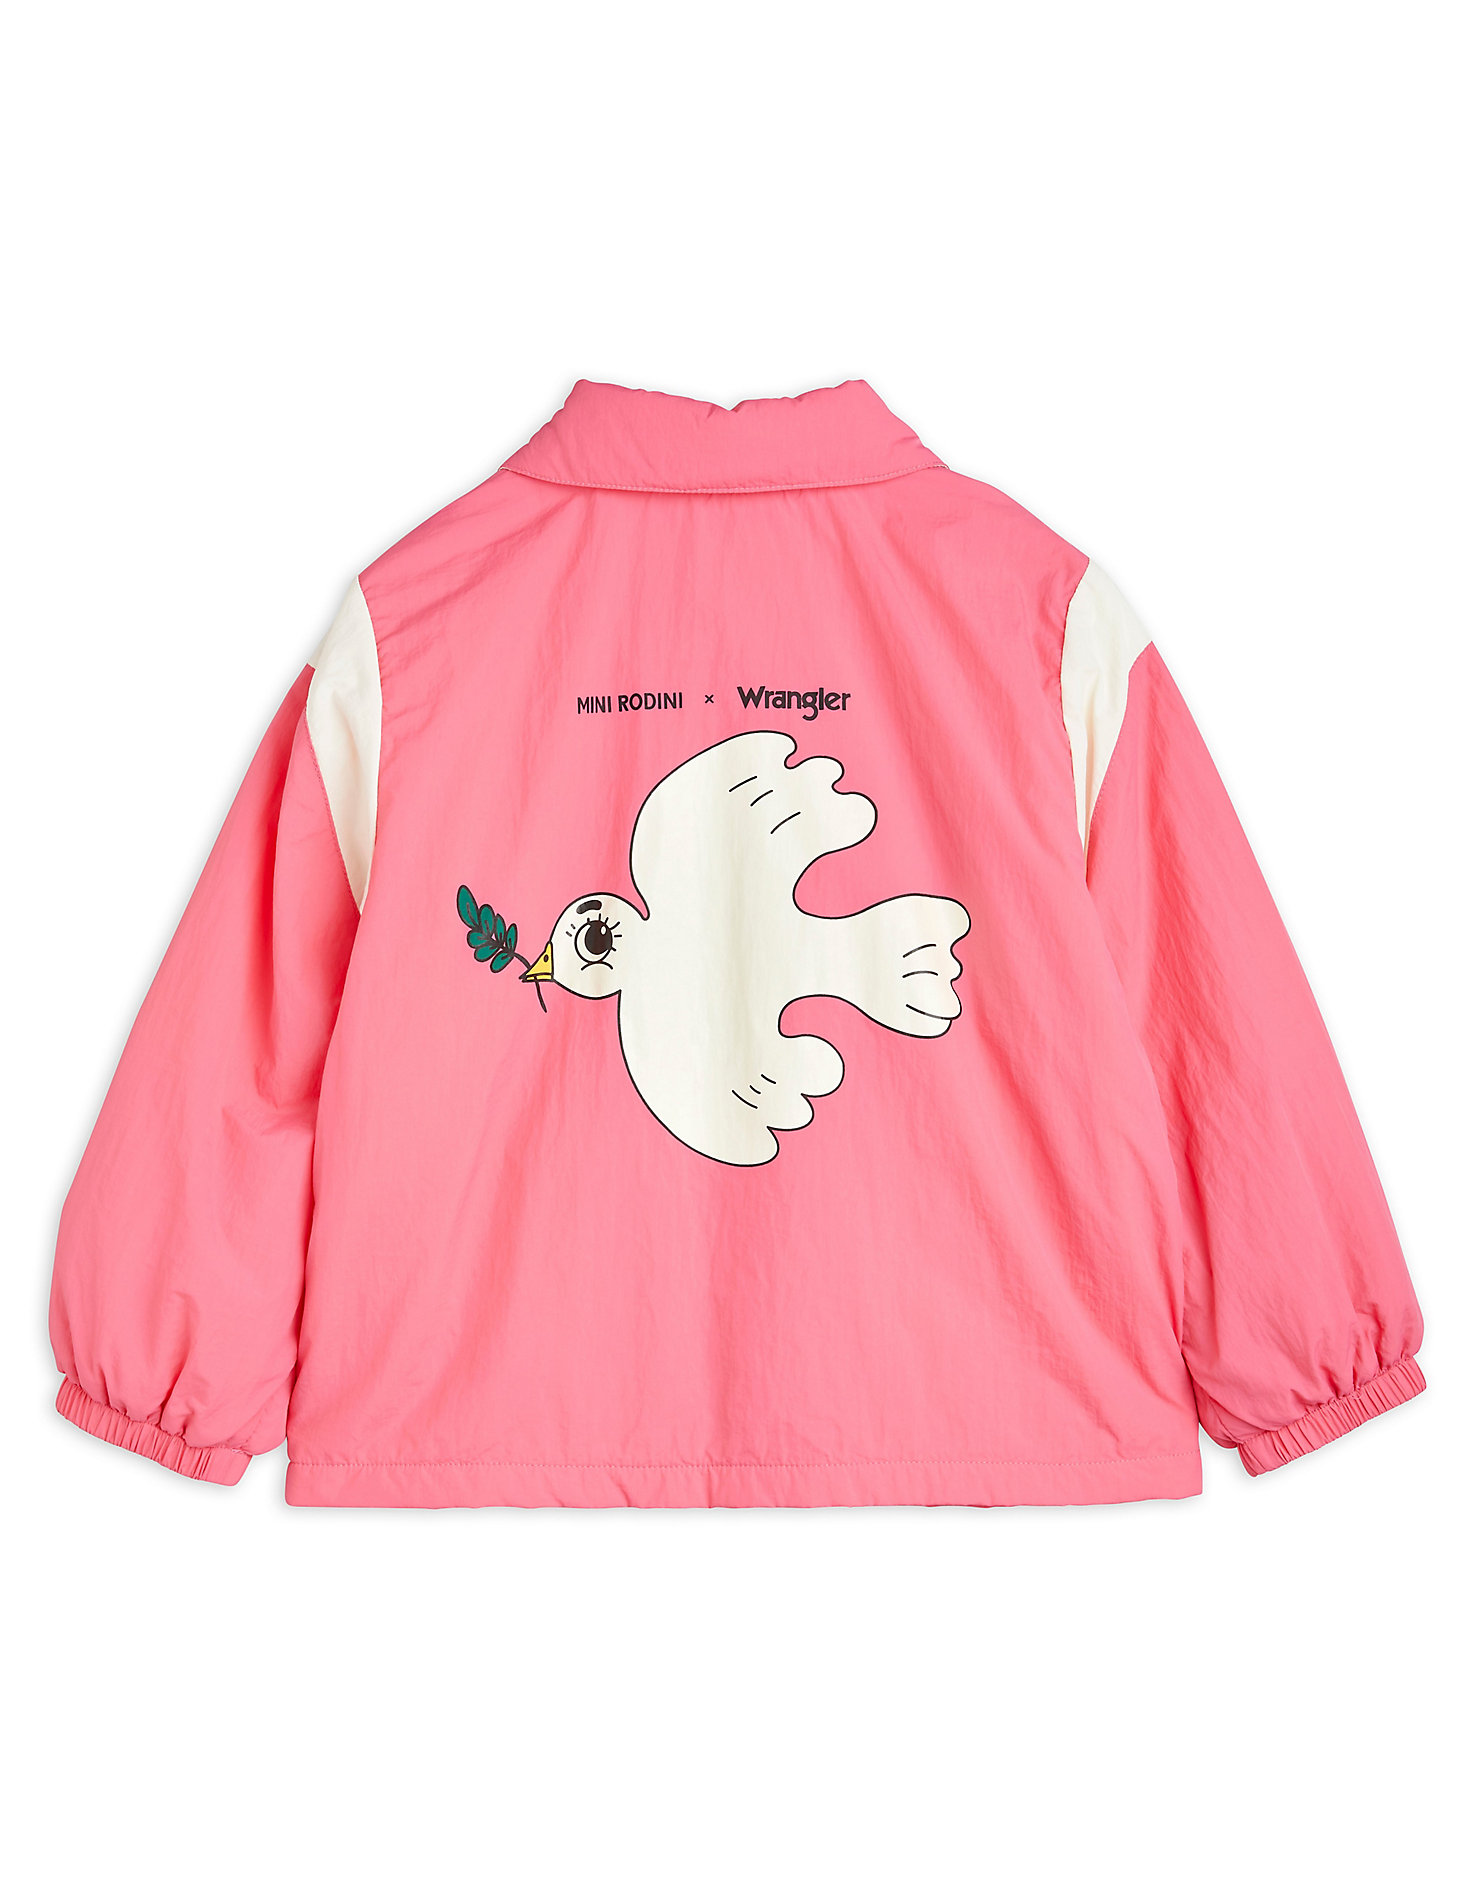 Mini Rodini x Wrangler Peace Dove Lined Coach Jacket in Pink alternative view 2